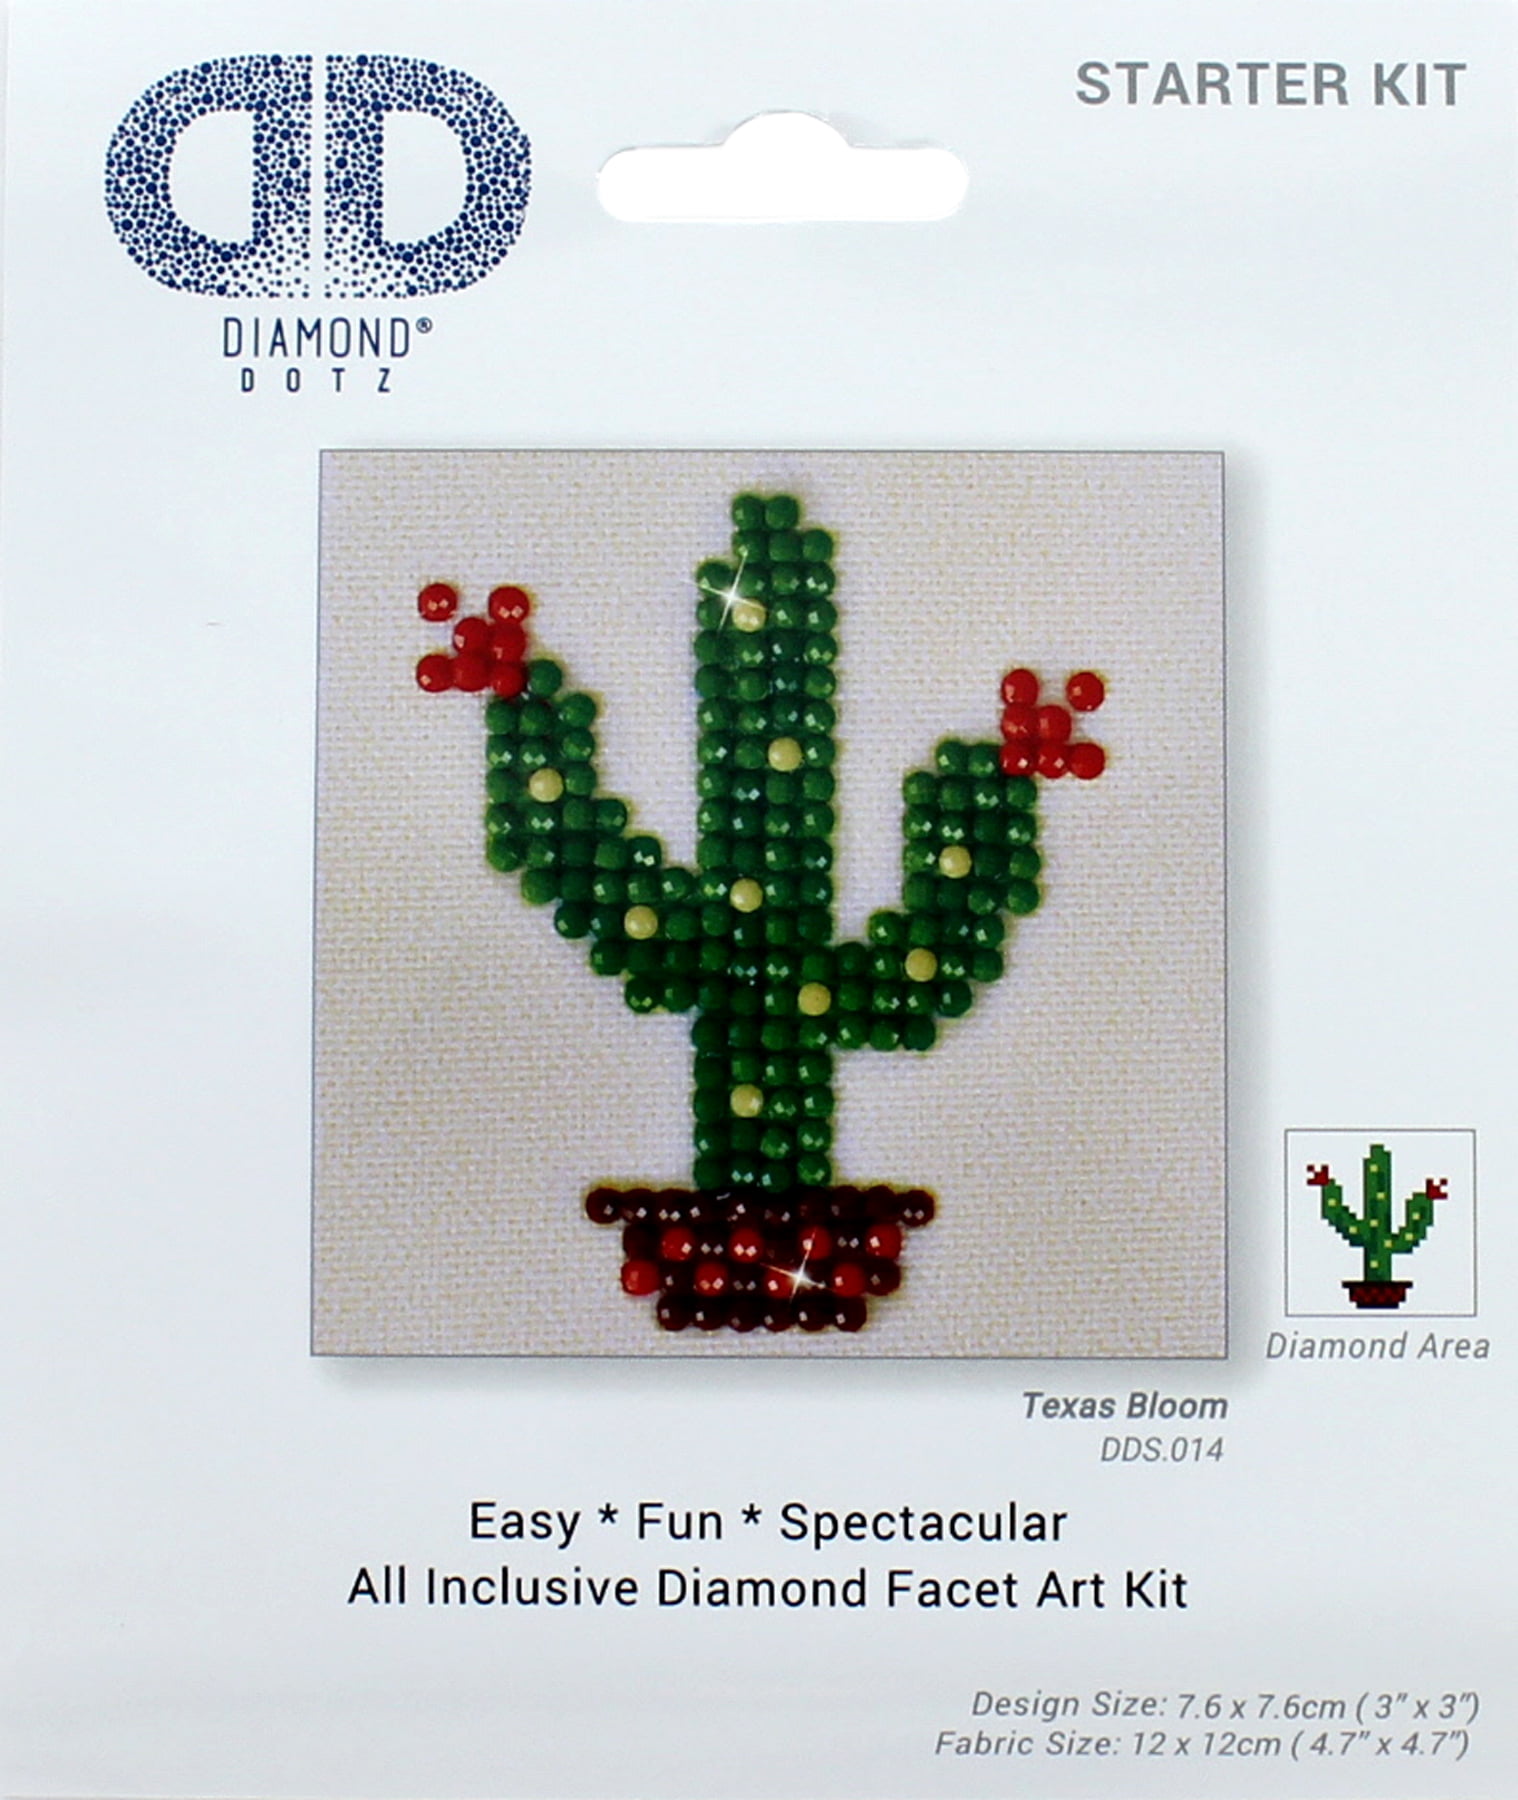 Diamond Dotz Diamond Embroidery Facet Art Kit 4X4-Love w/Frame